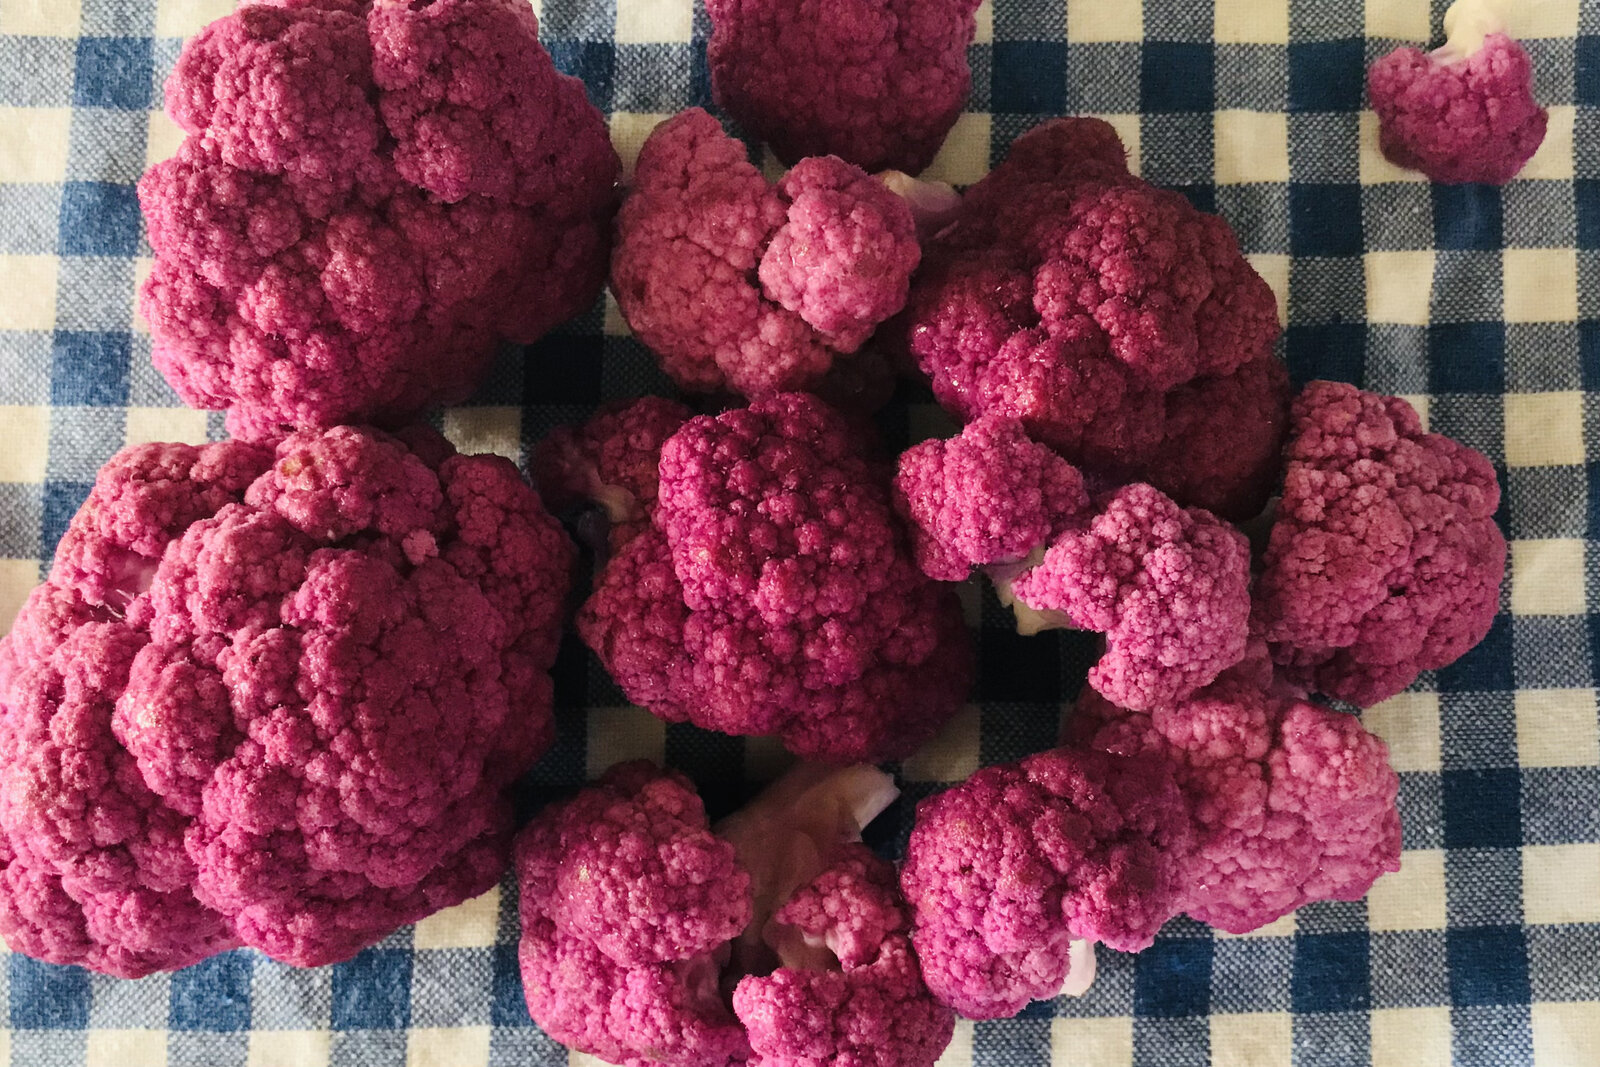 Raw Purple Cauliflowers.jpeg